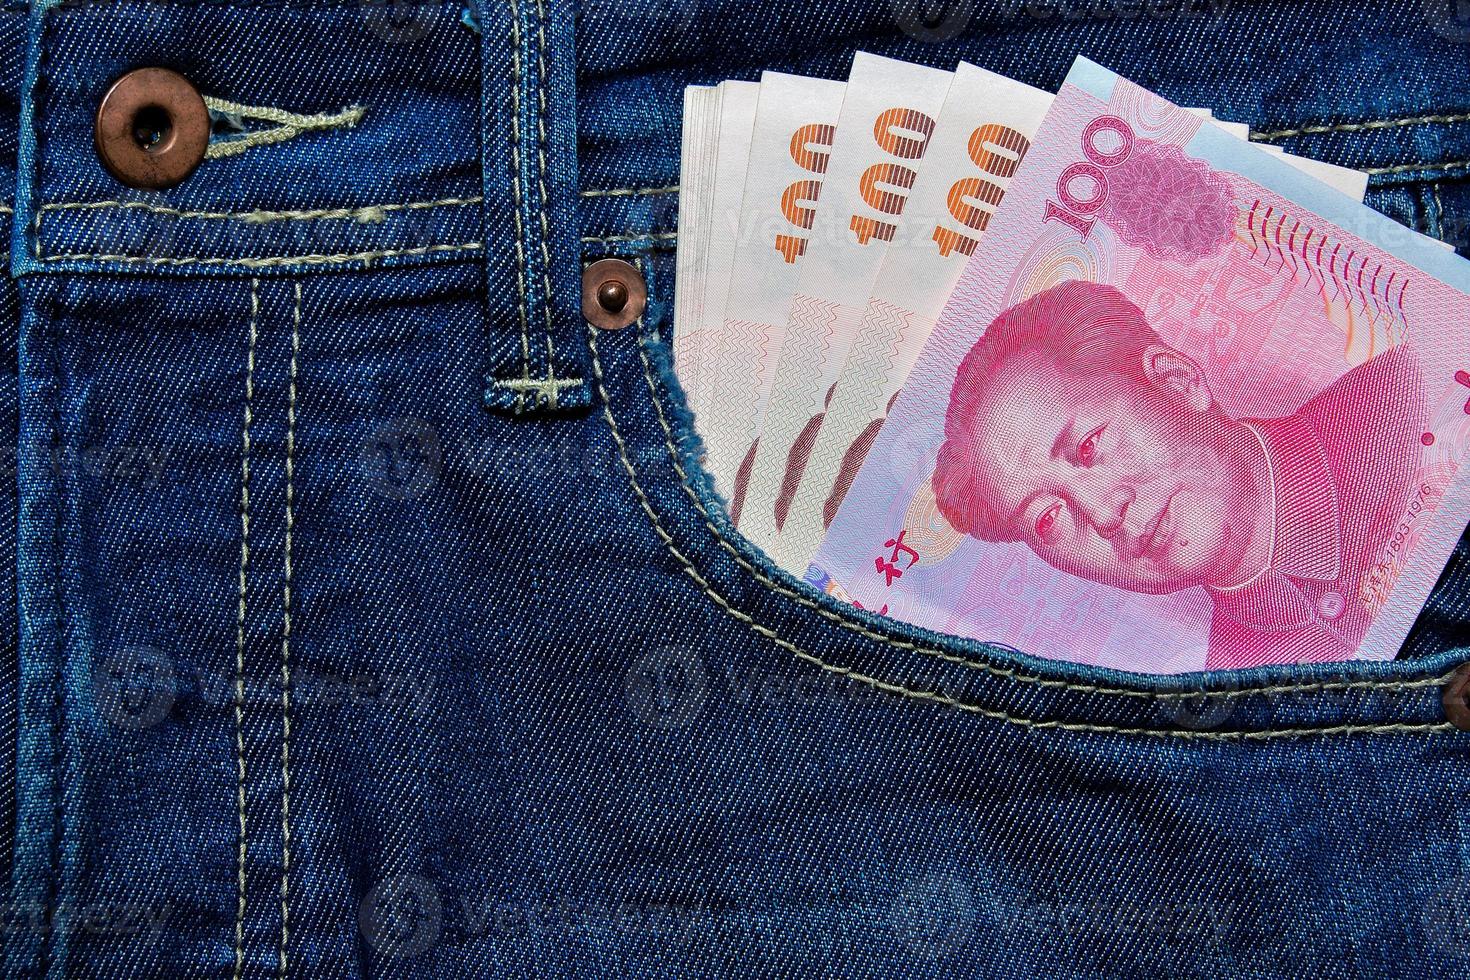 yuan ou rmb e tailandês baht dentro jeans bolso foto